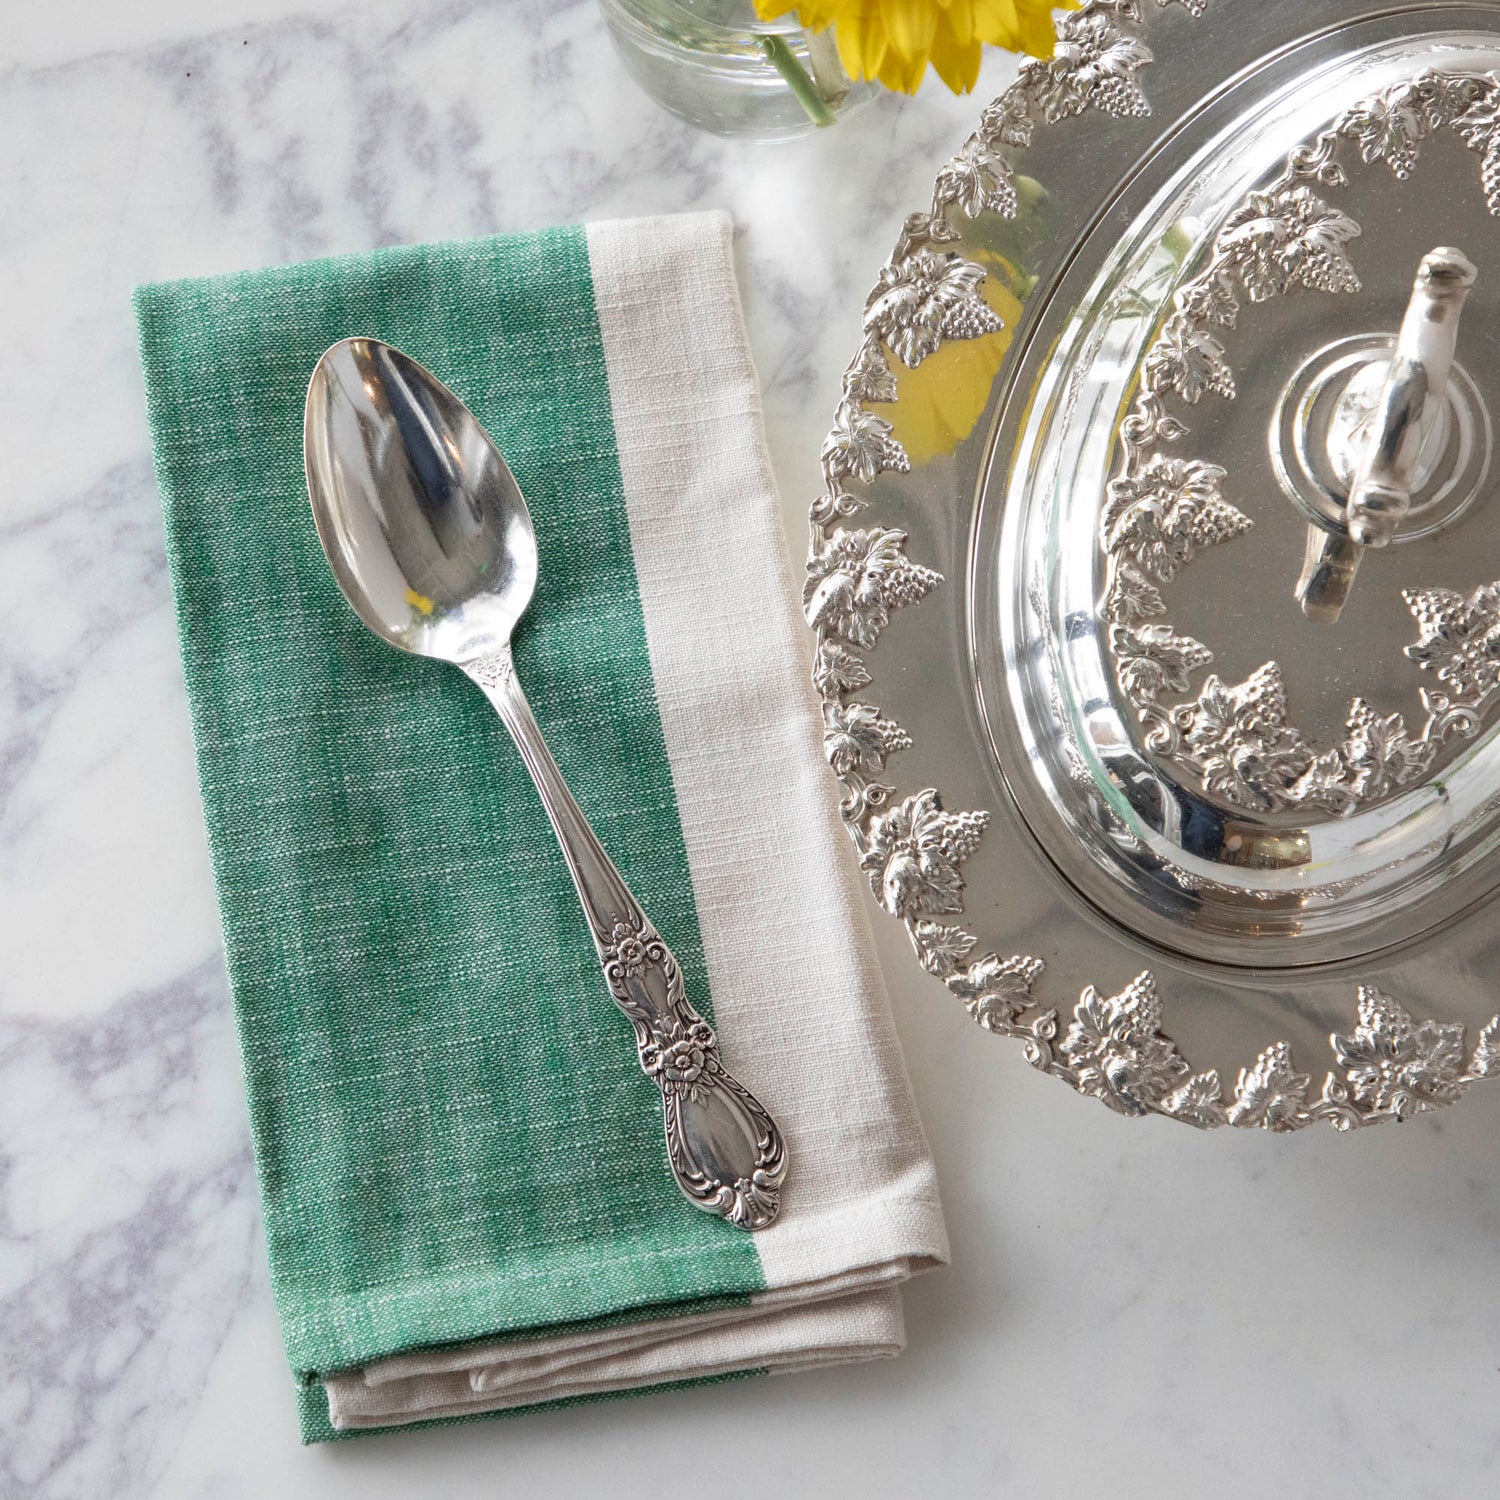 Vintage Silver-Plate Serving Spoon